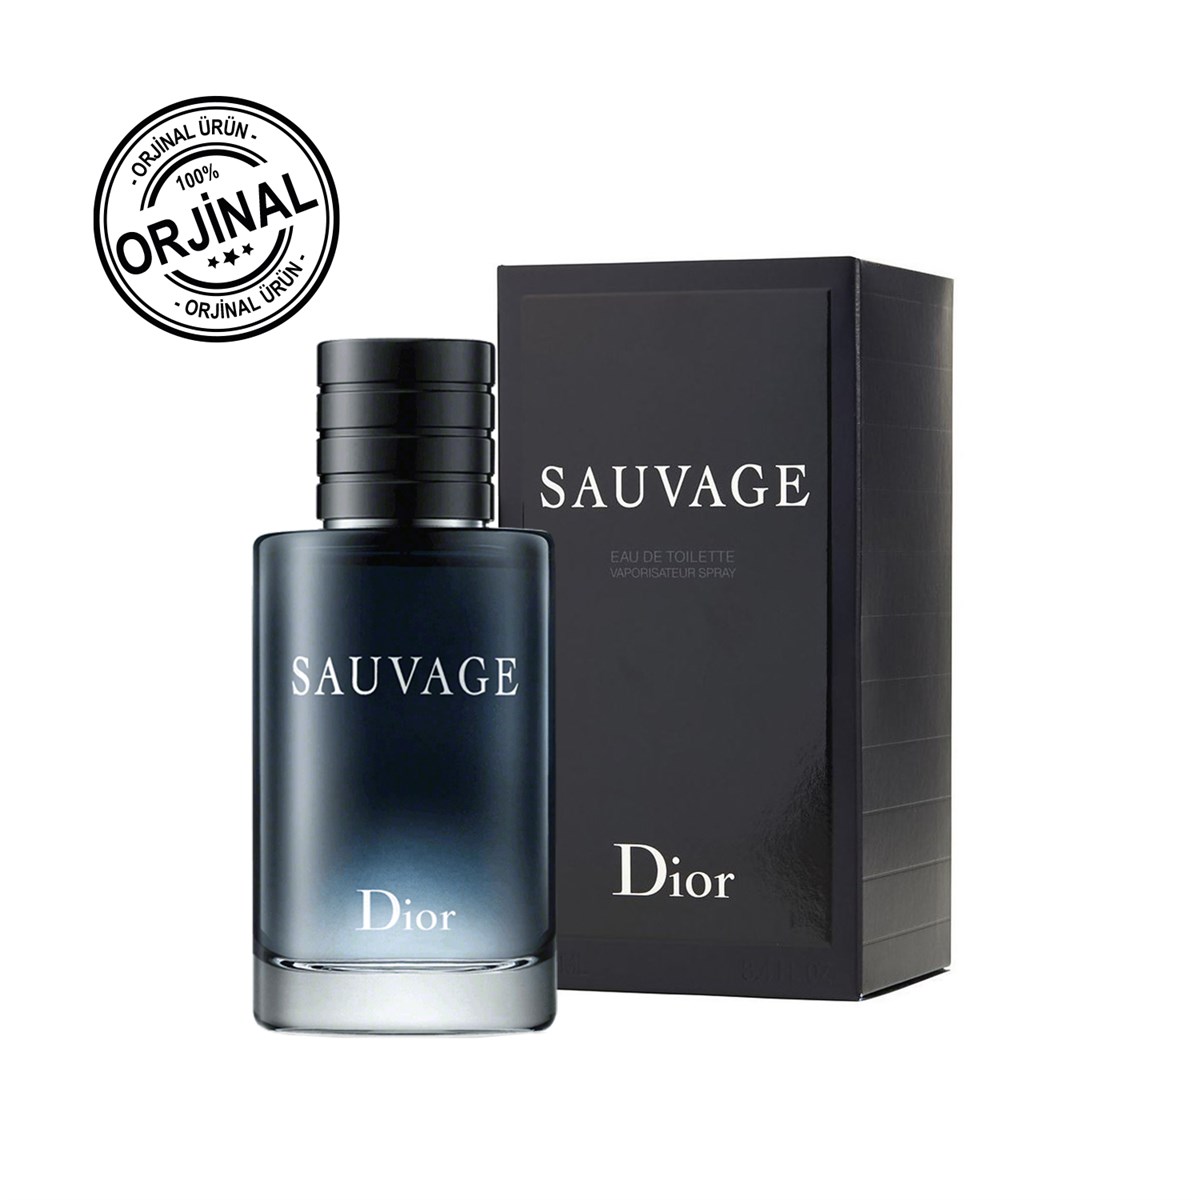 Dior Sauvage Edt 200 Ml Discount  azccomco 1691972336